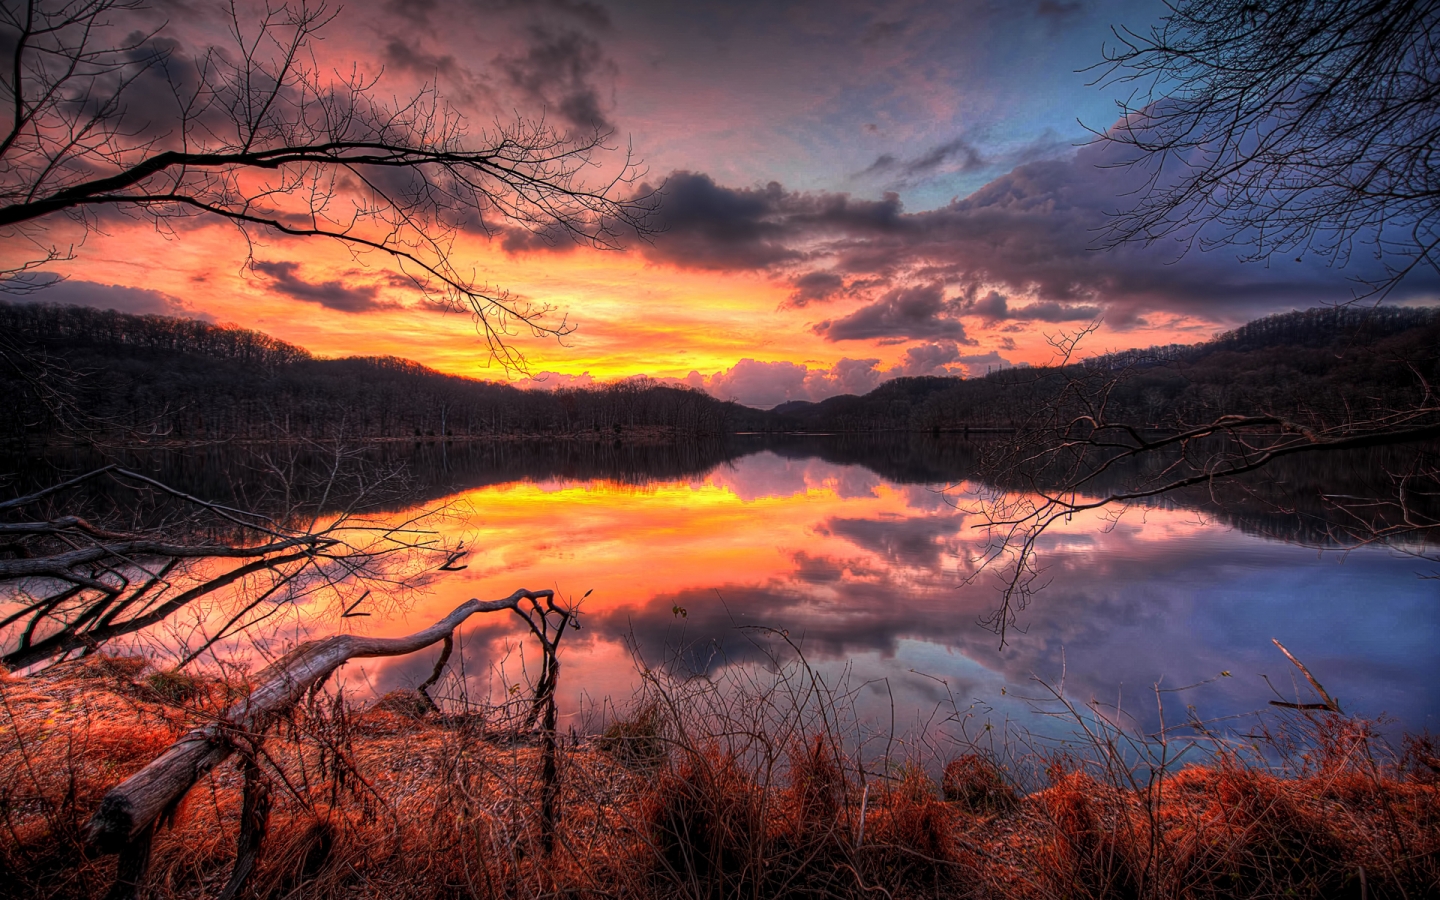 Fire Sunset Reflection for 1440 x 900 widescreen resolution